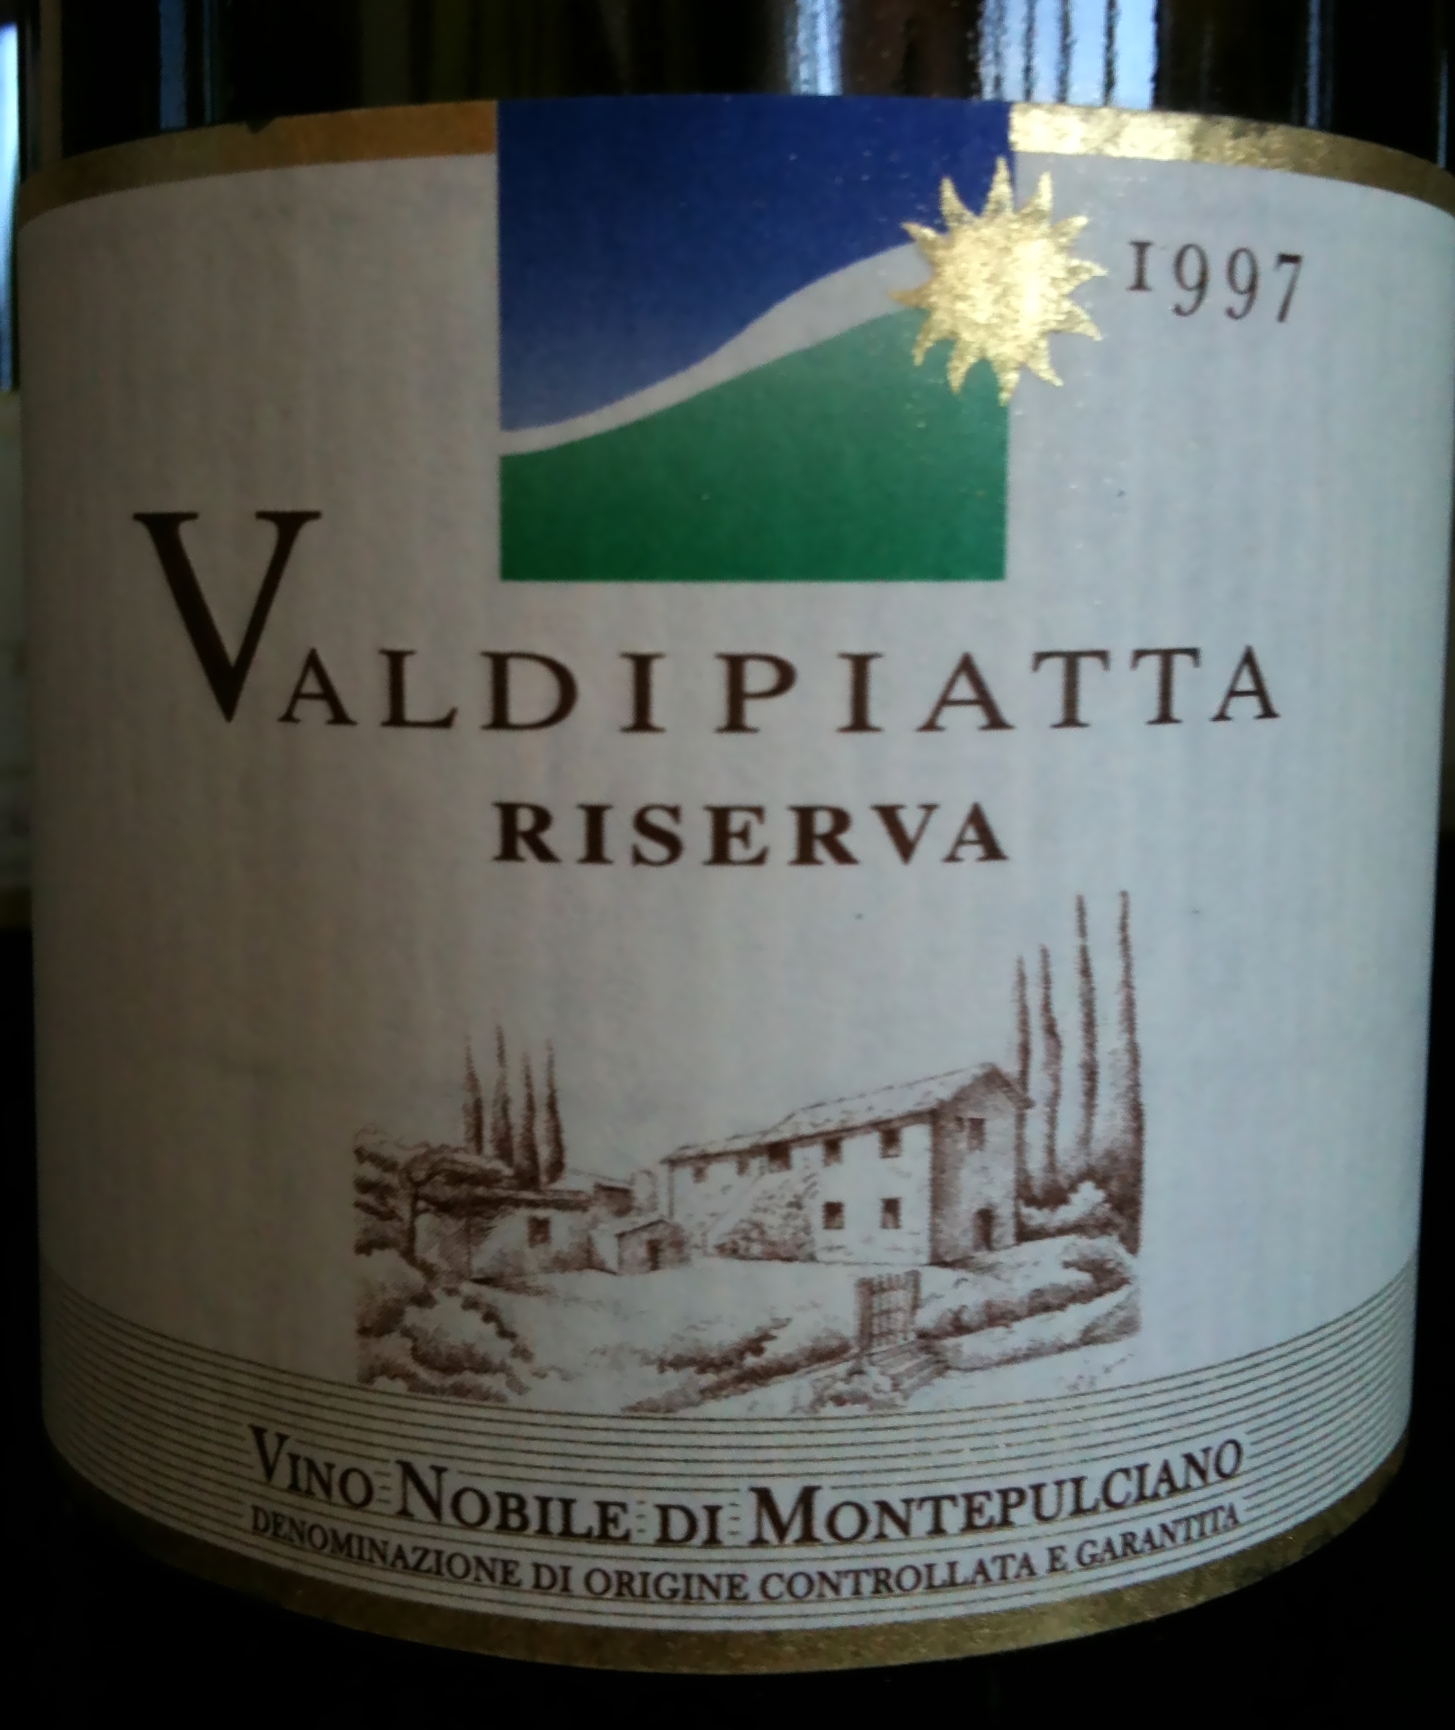 Tenuta Valdipiatta Vino Nobile di Montepulciano Riserva 1997